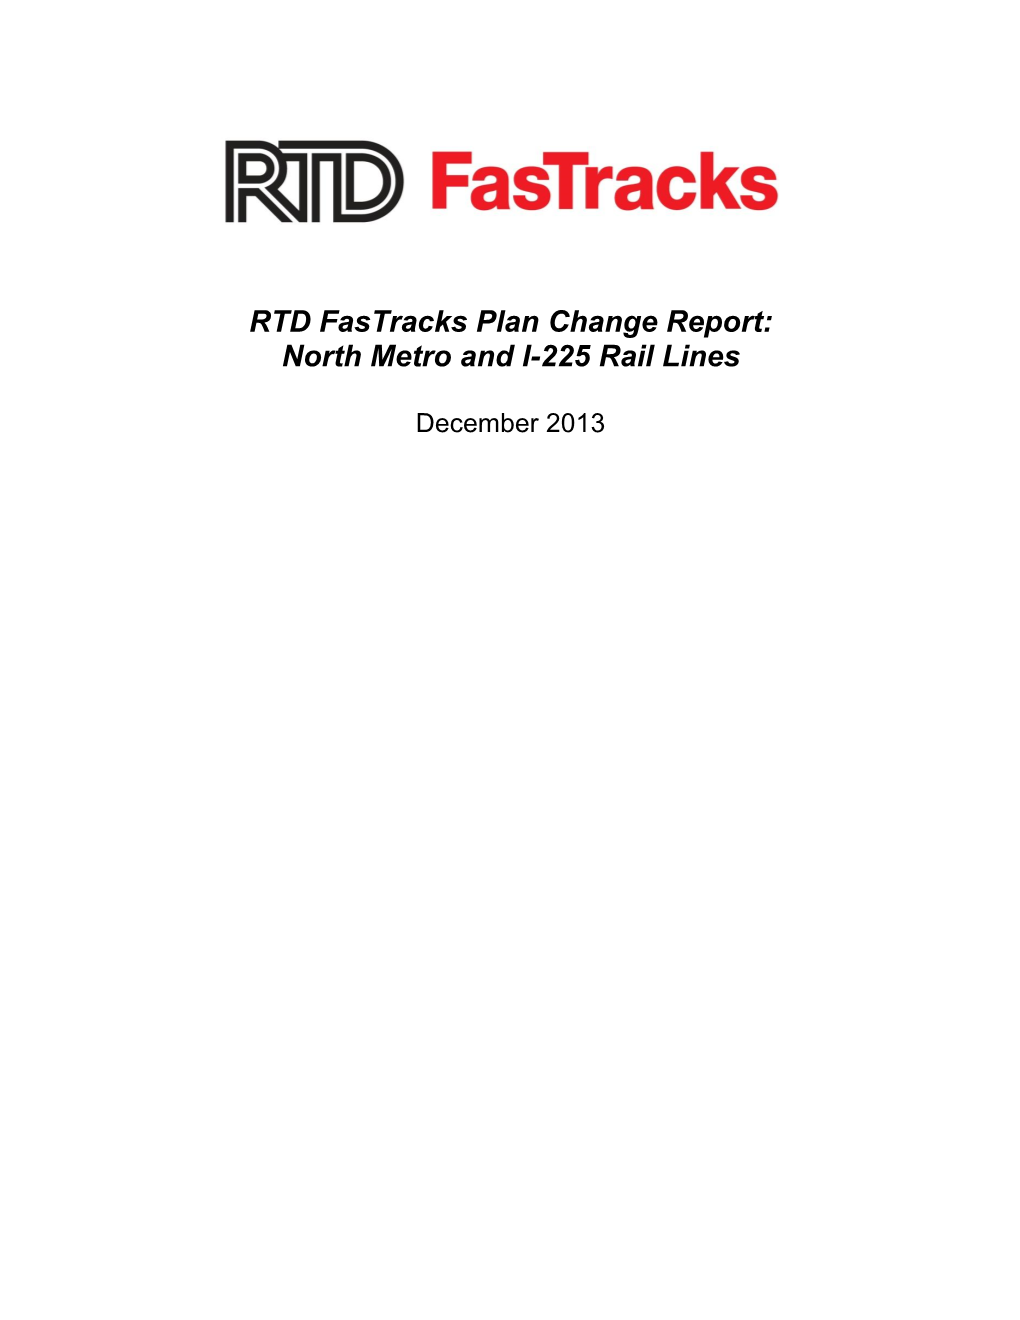 RTD Fastracks Plan Change Report: North Metro and I-225 Rail Lines